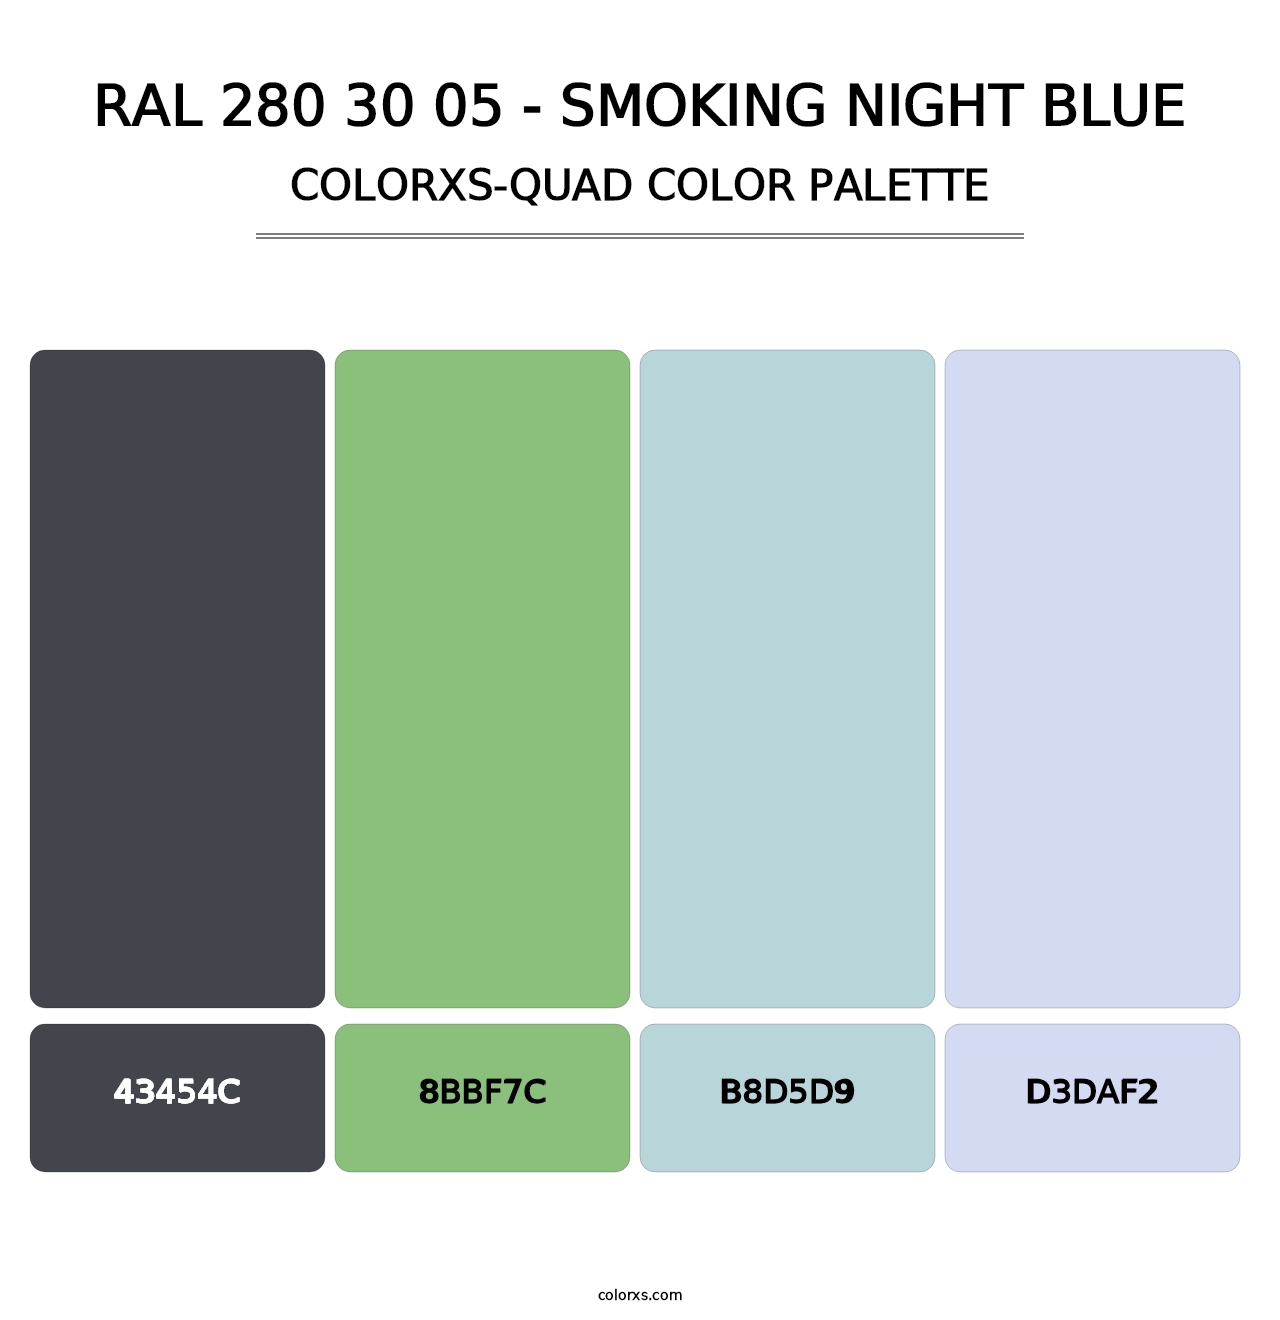 RAL 280 30 05 - Smoking Night Blue - Colorxs Quad Palette